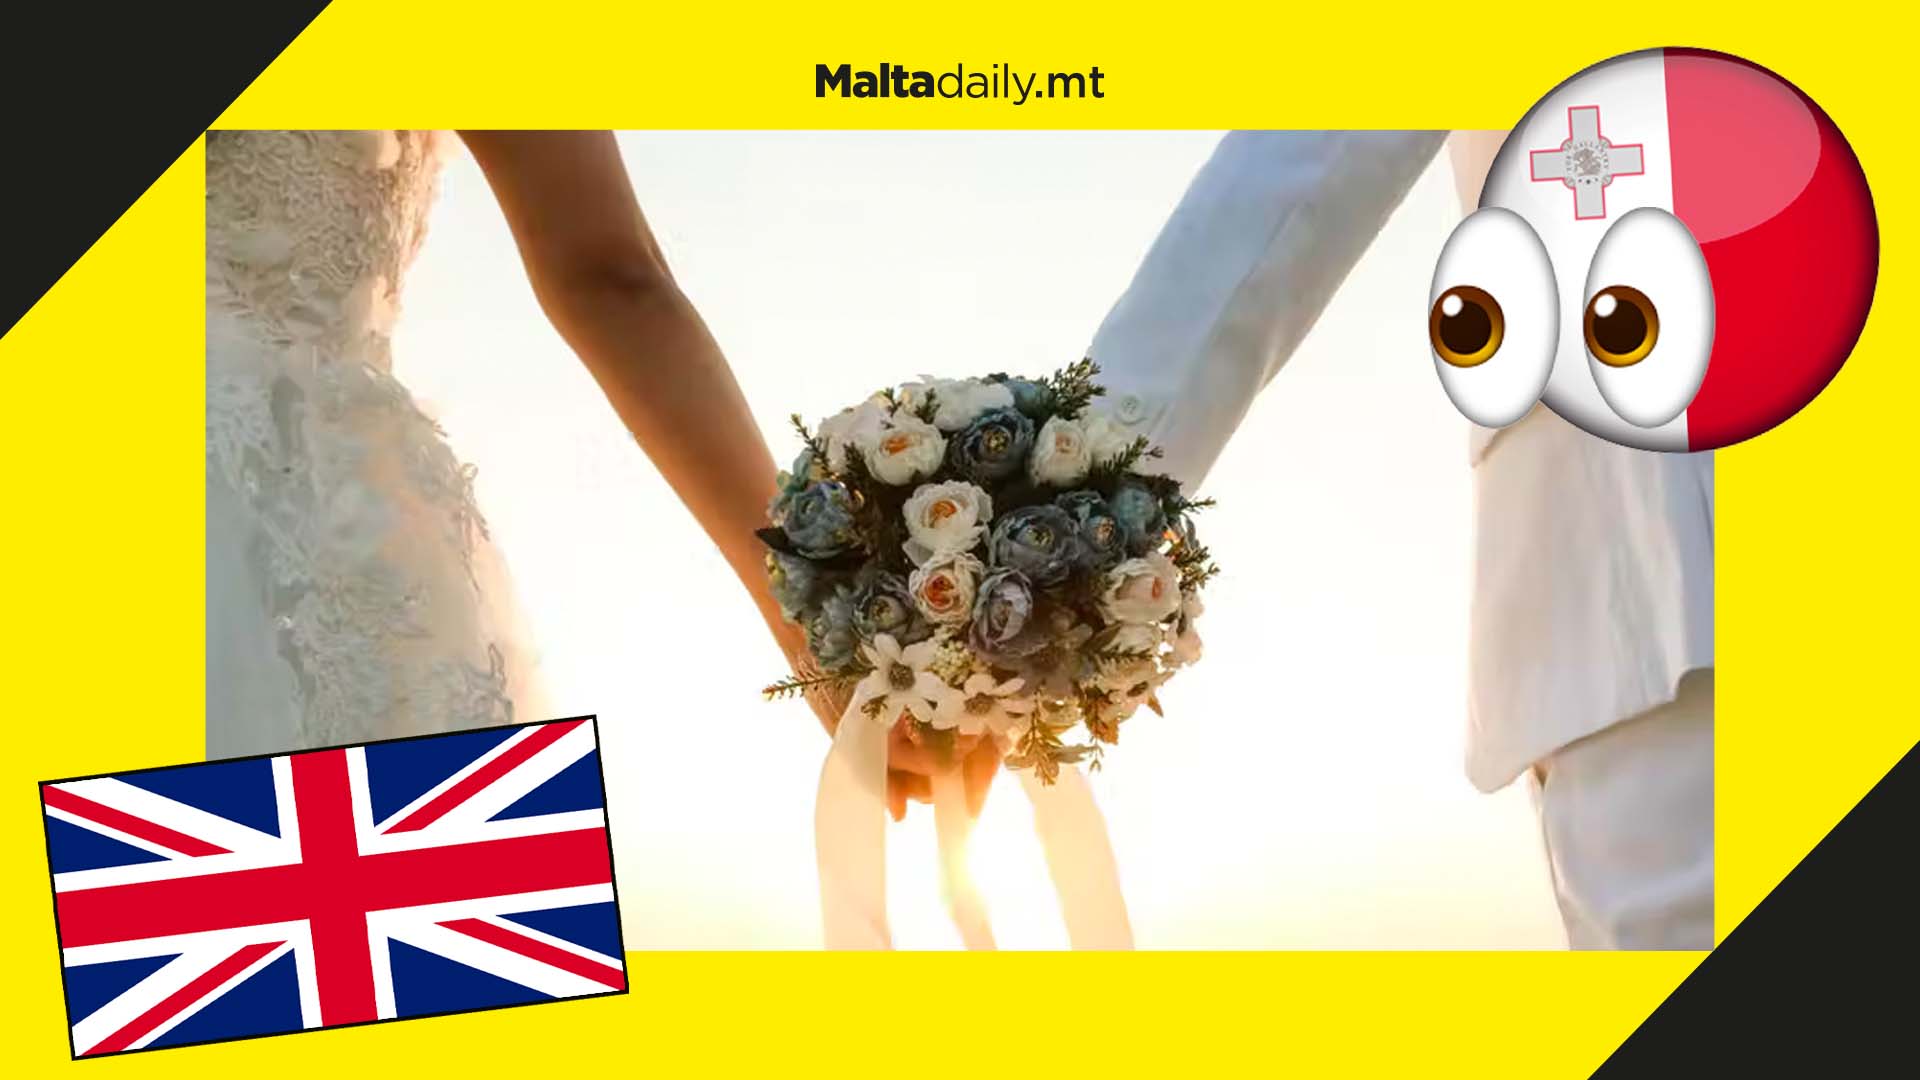 England raises legal marriage age to 18 - should Malta follow suit?